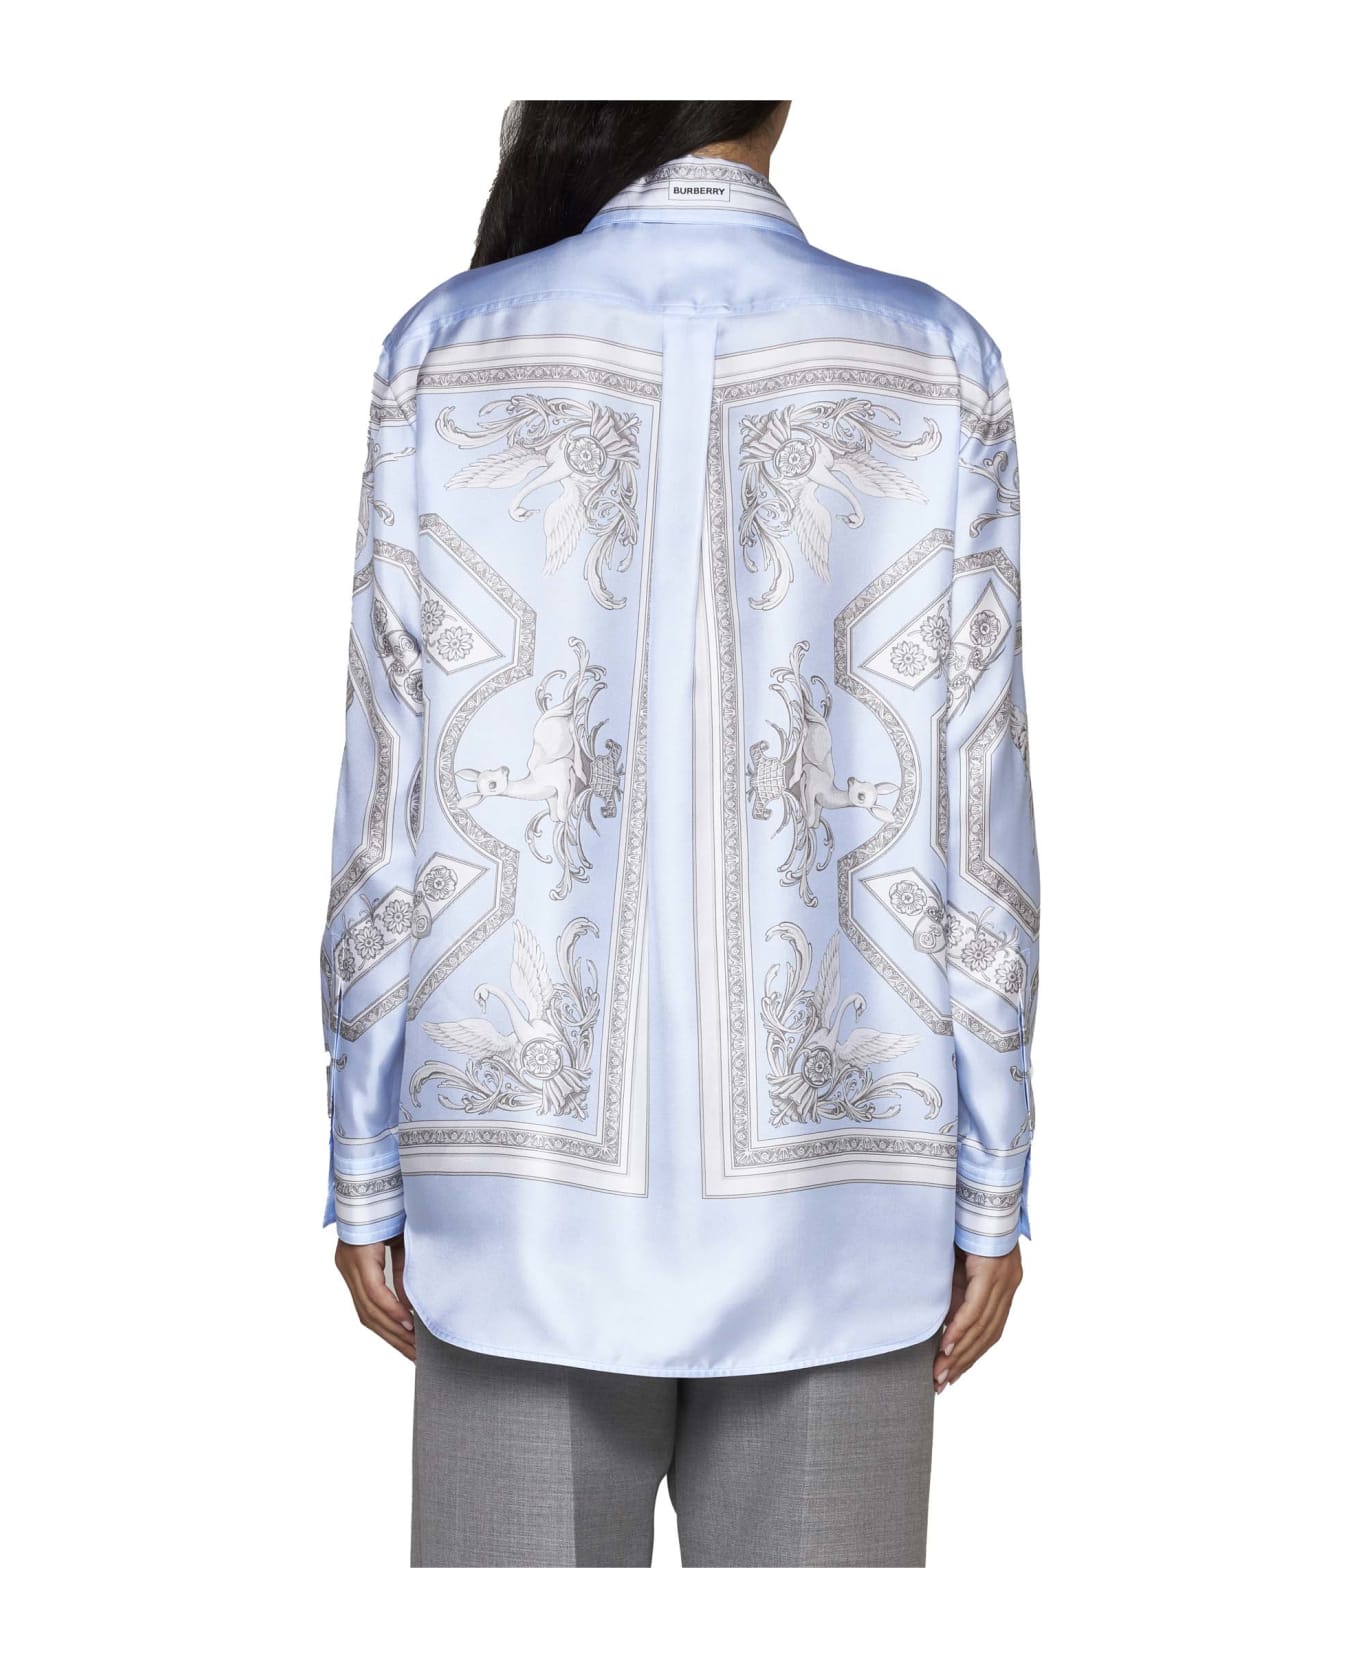 Burberry Ivanna Print Silk Shirt - Pale blue ip pat シャツ